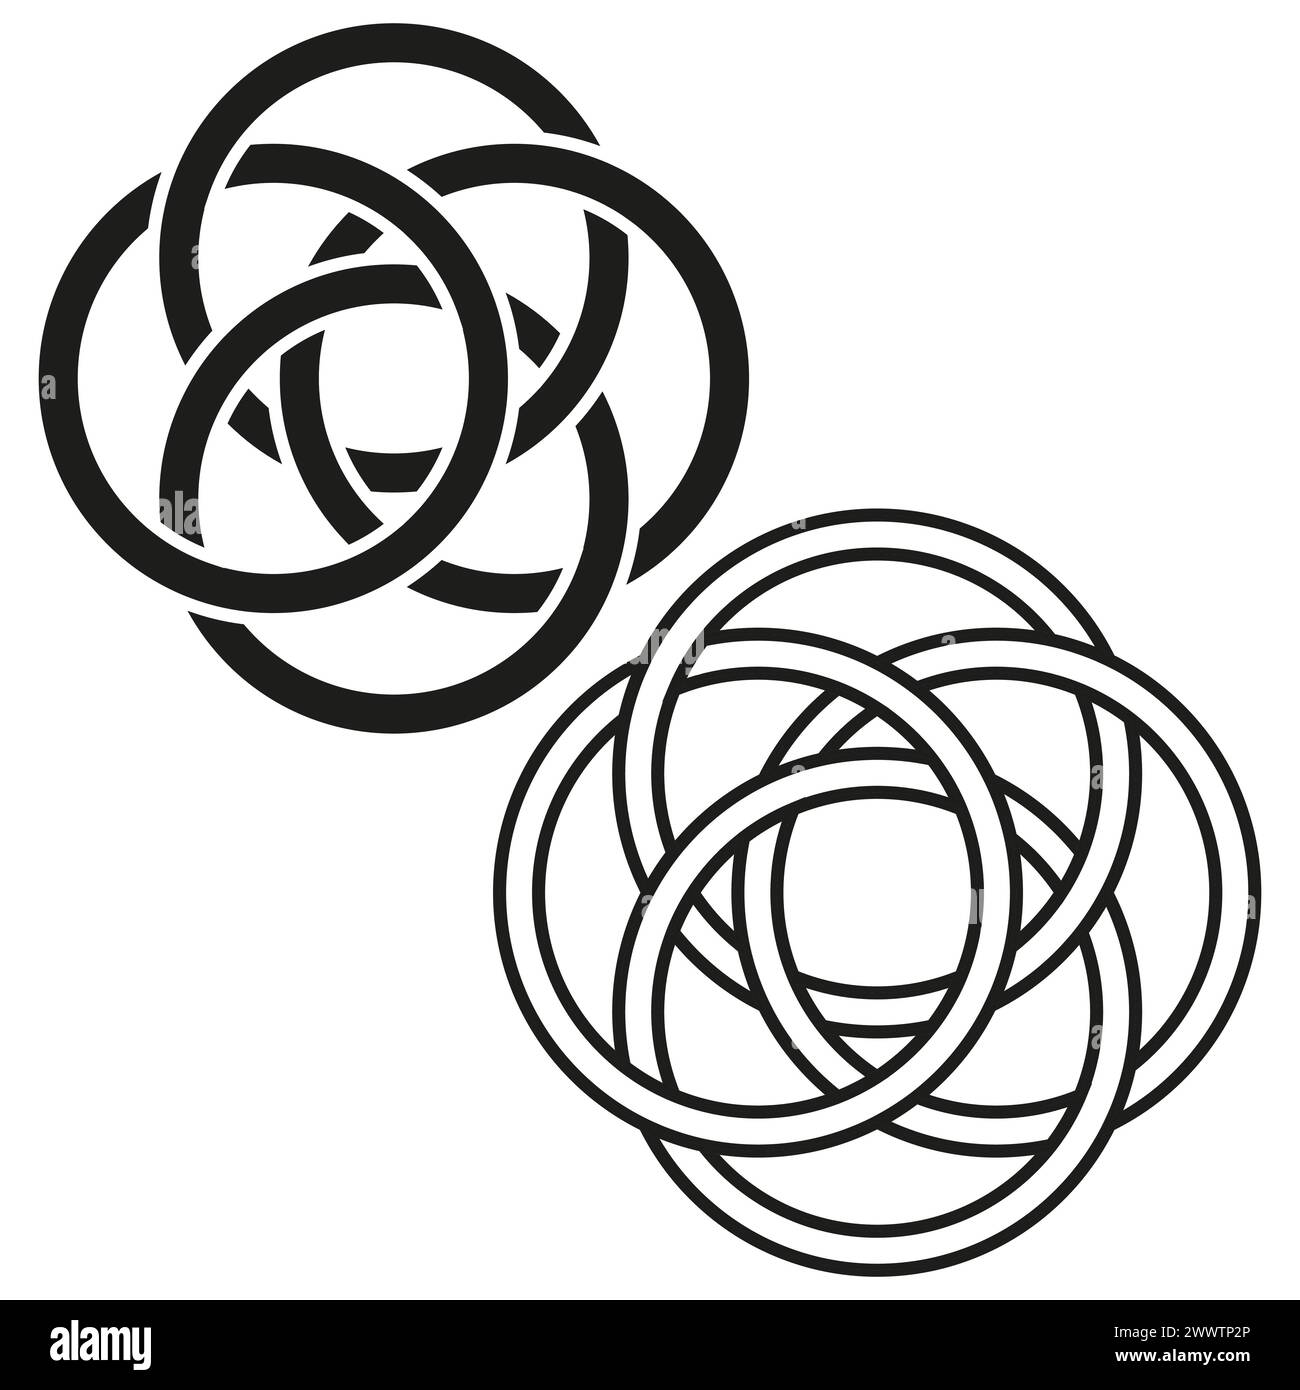 Abstraktes, ineinander greifendes Kreisdesign. Muster überlappender Ringe. Keltisch inspiriertes Knotenkunstwerk. Vektorabbildung. EPS 10. Stock Vektor